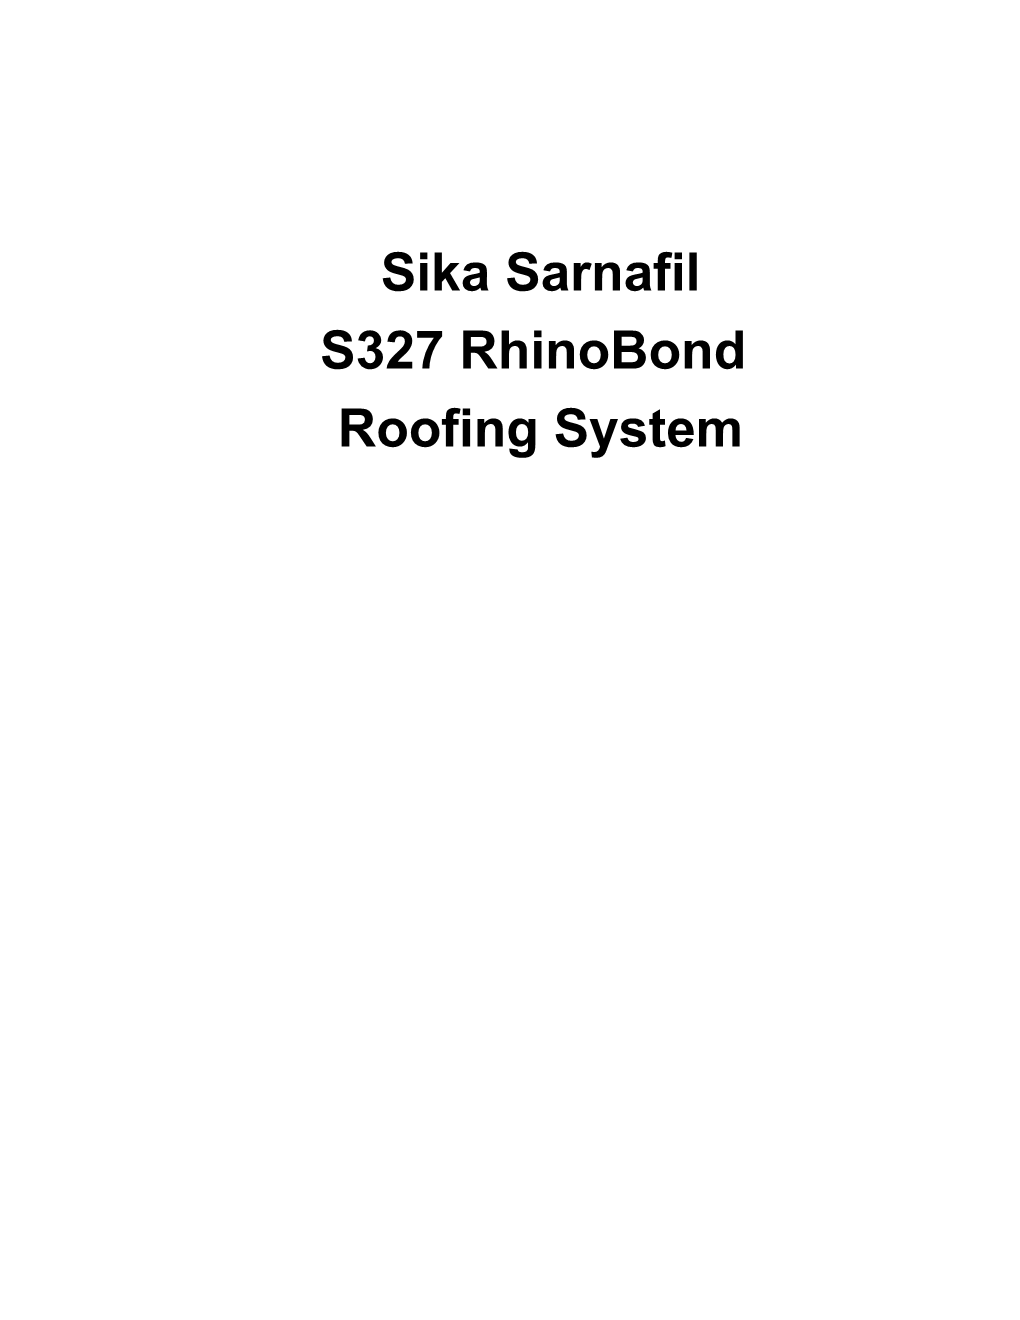 Sarnafil S327 Rhinobond Guide Specification